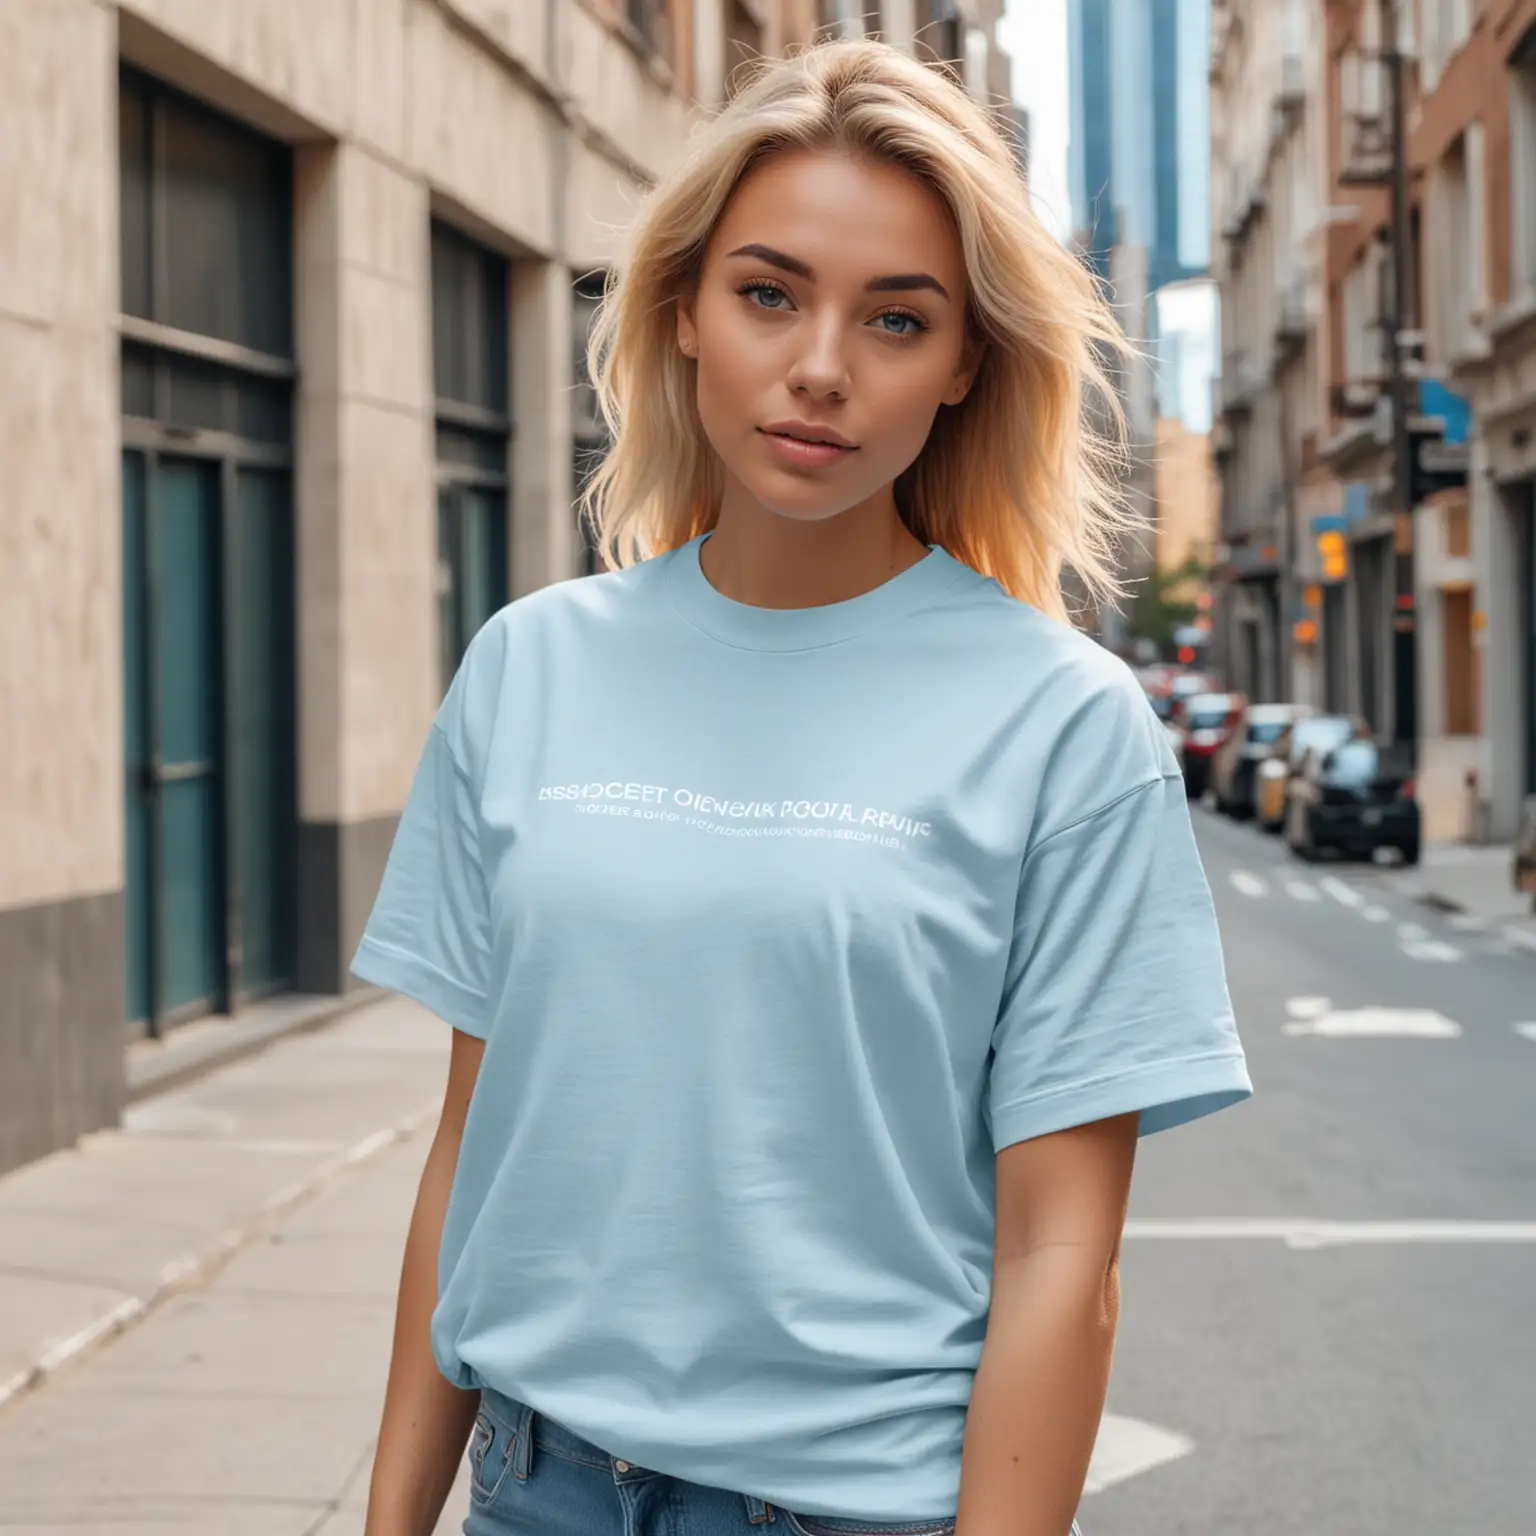 blonde woman wearing light blue oversized gildan 5000 t-shirt mockup street background, looking front